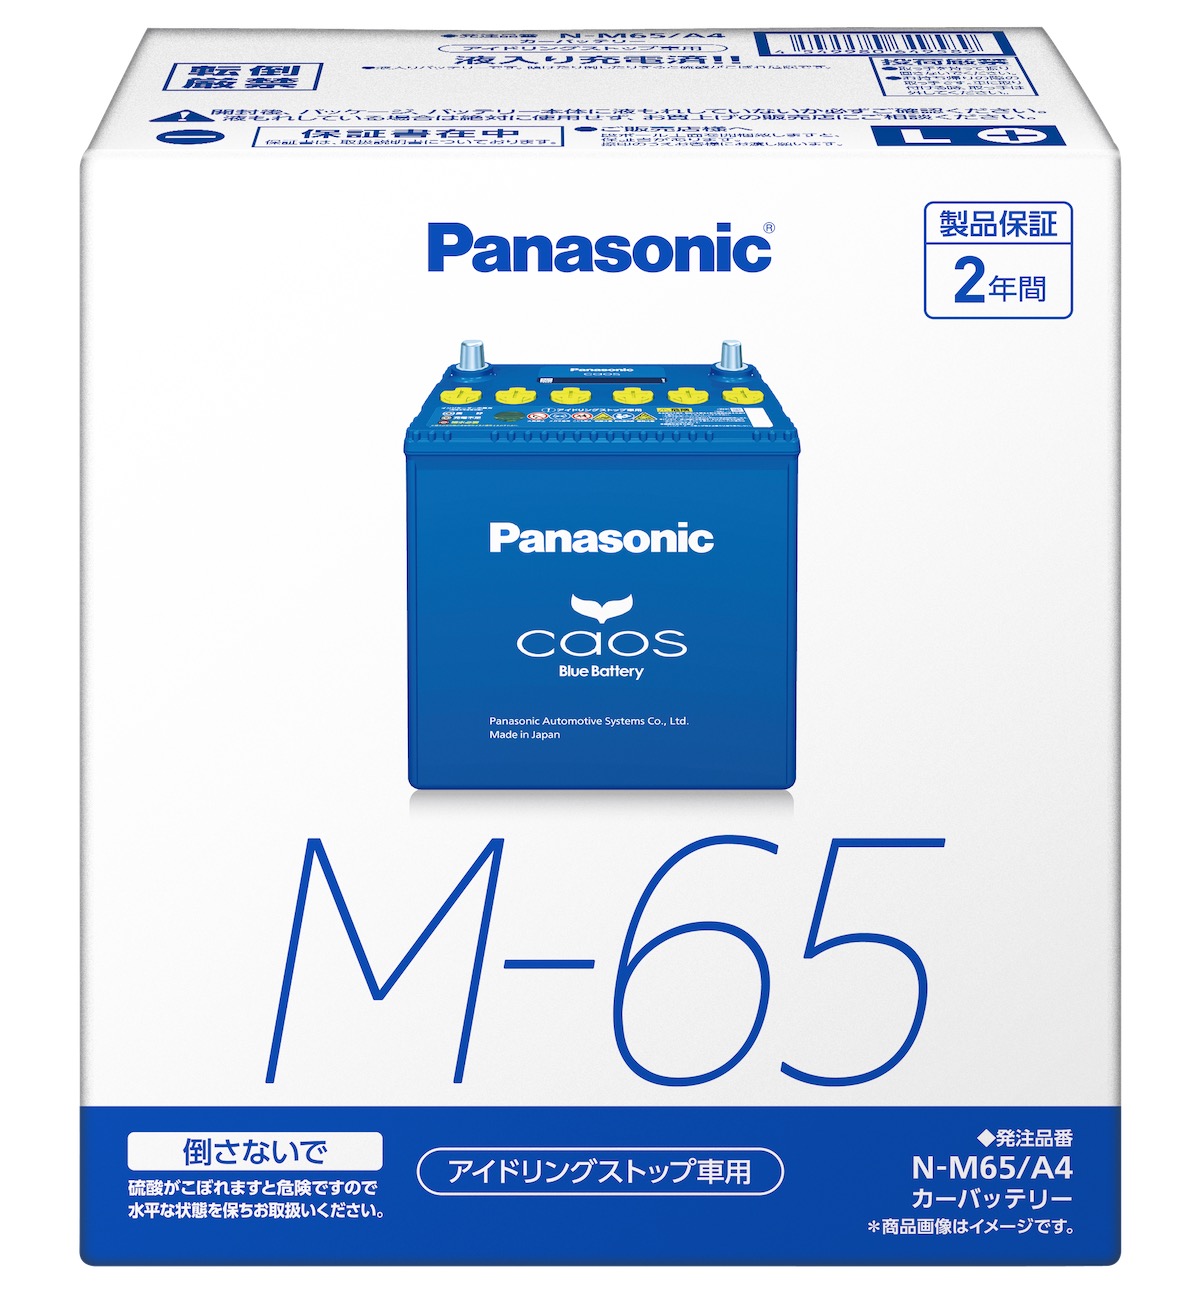 Panasonic N-60B19L/C8 スバル ルクラ 搭載(26B17L ※4) PANASONIC カオス ブルーバッテリー 安心サポート付